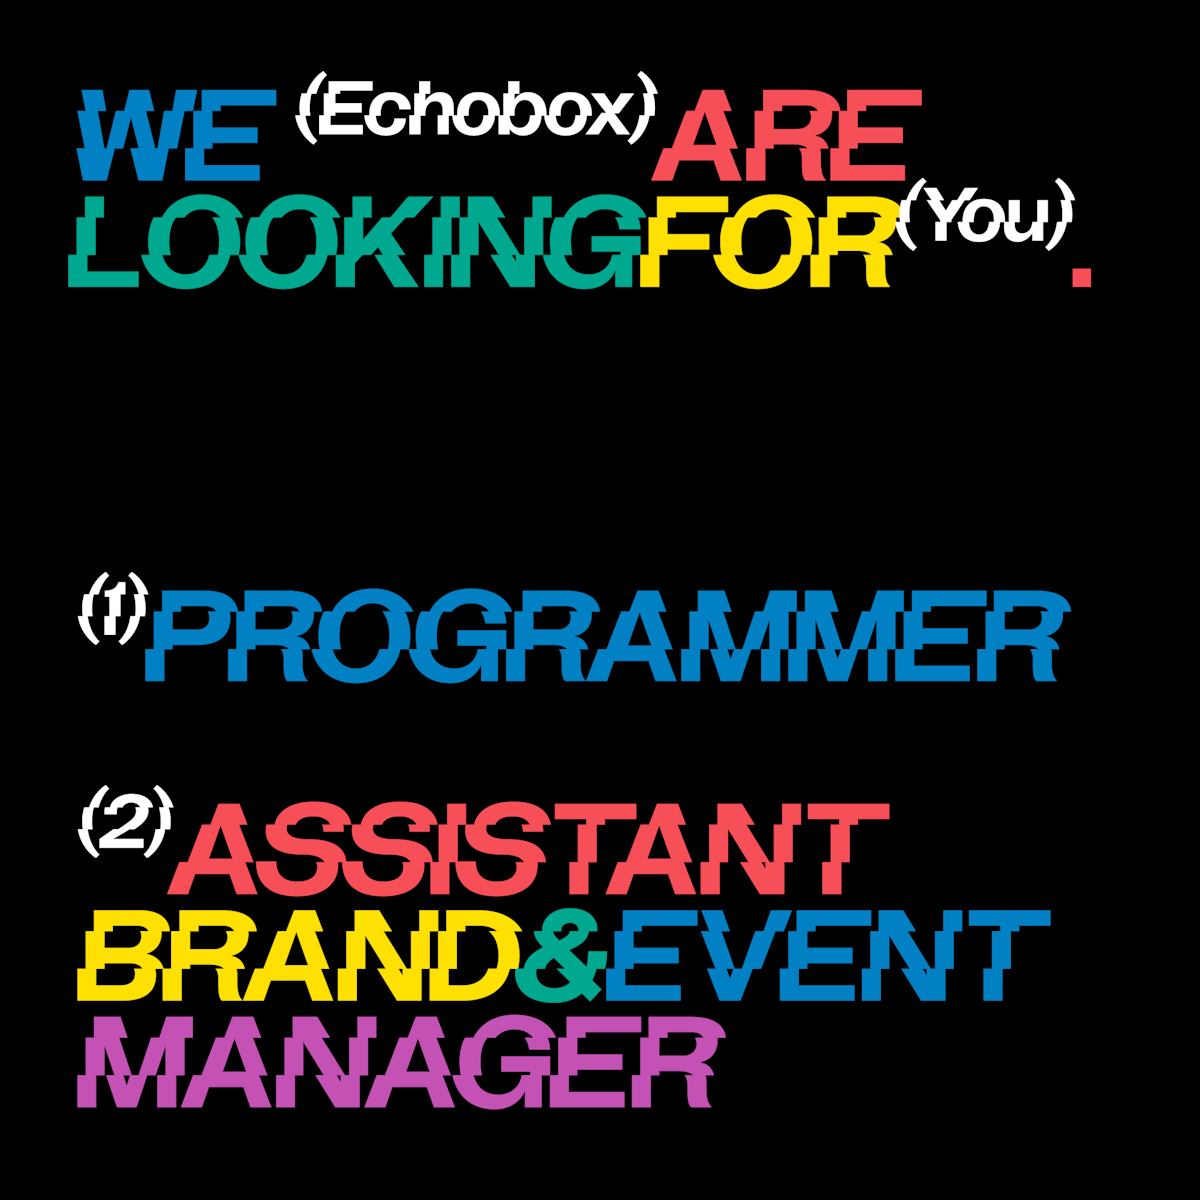 We're looking for new team members!